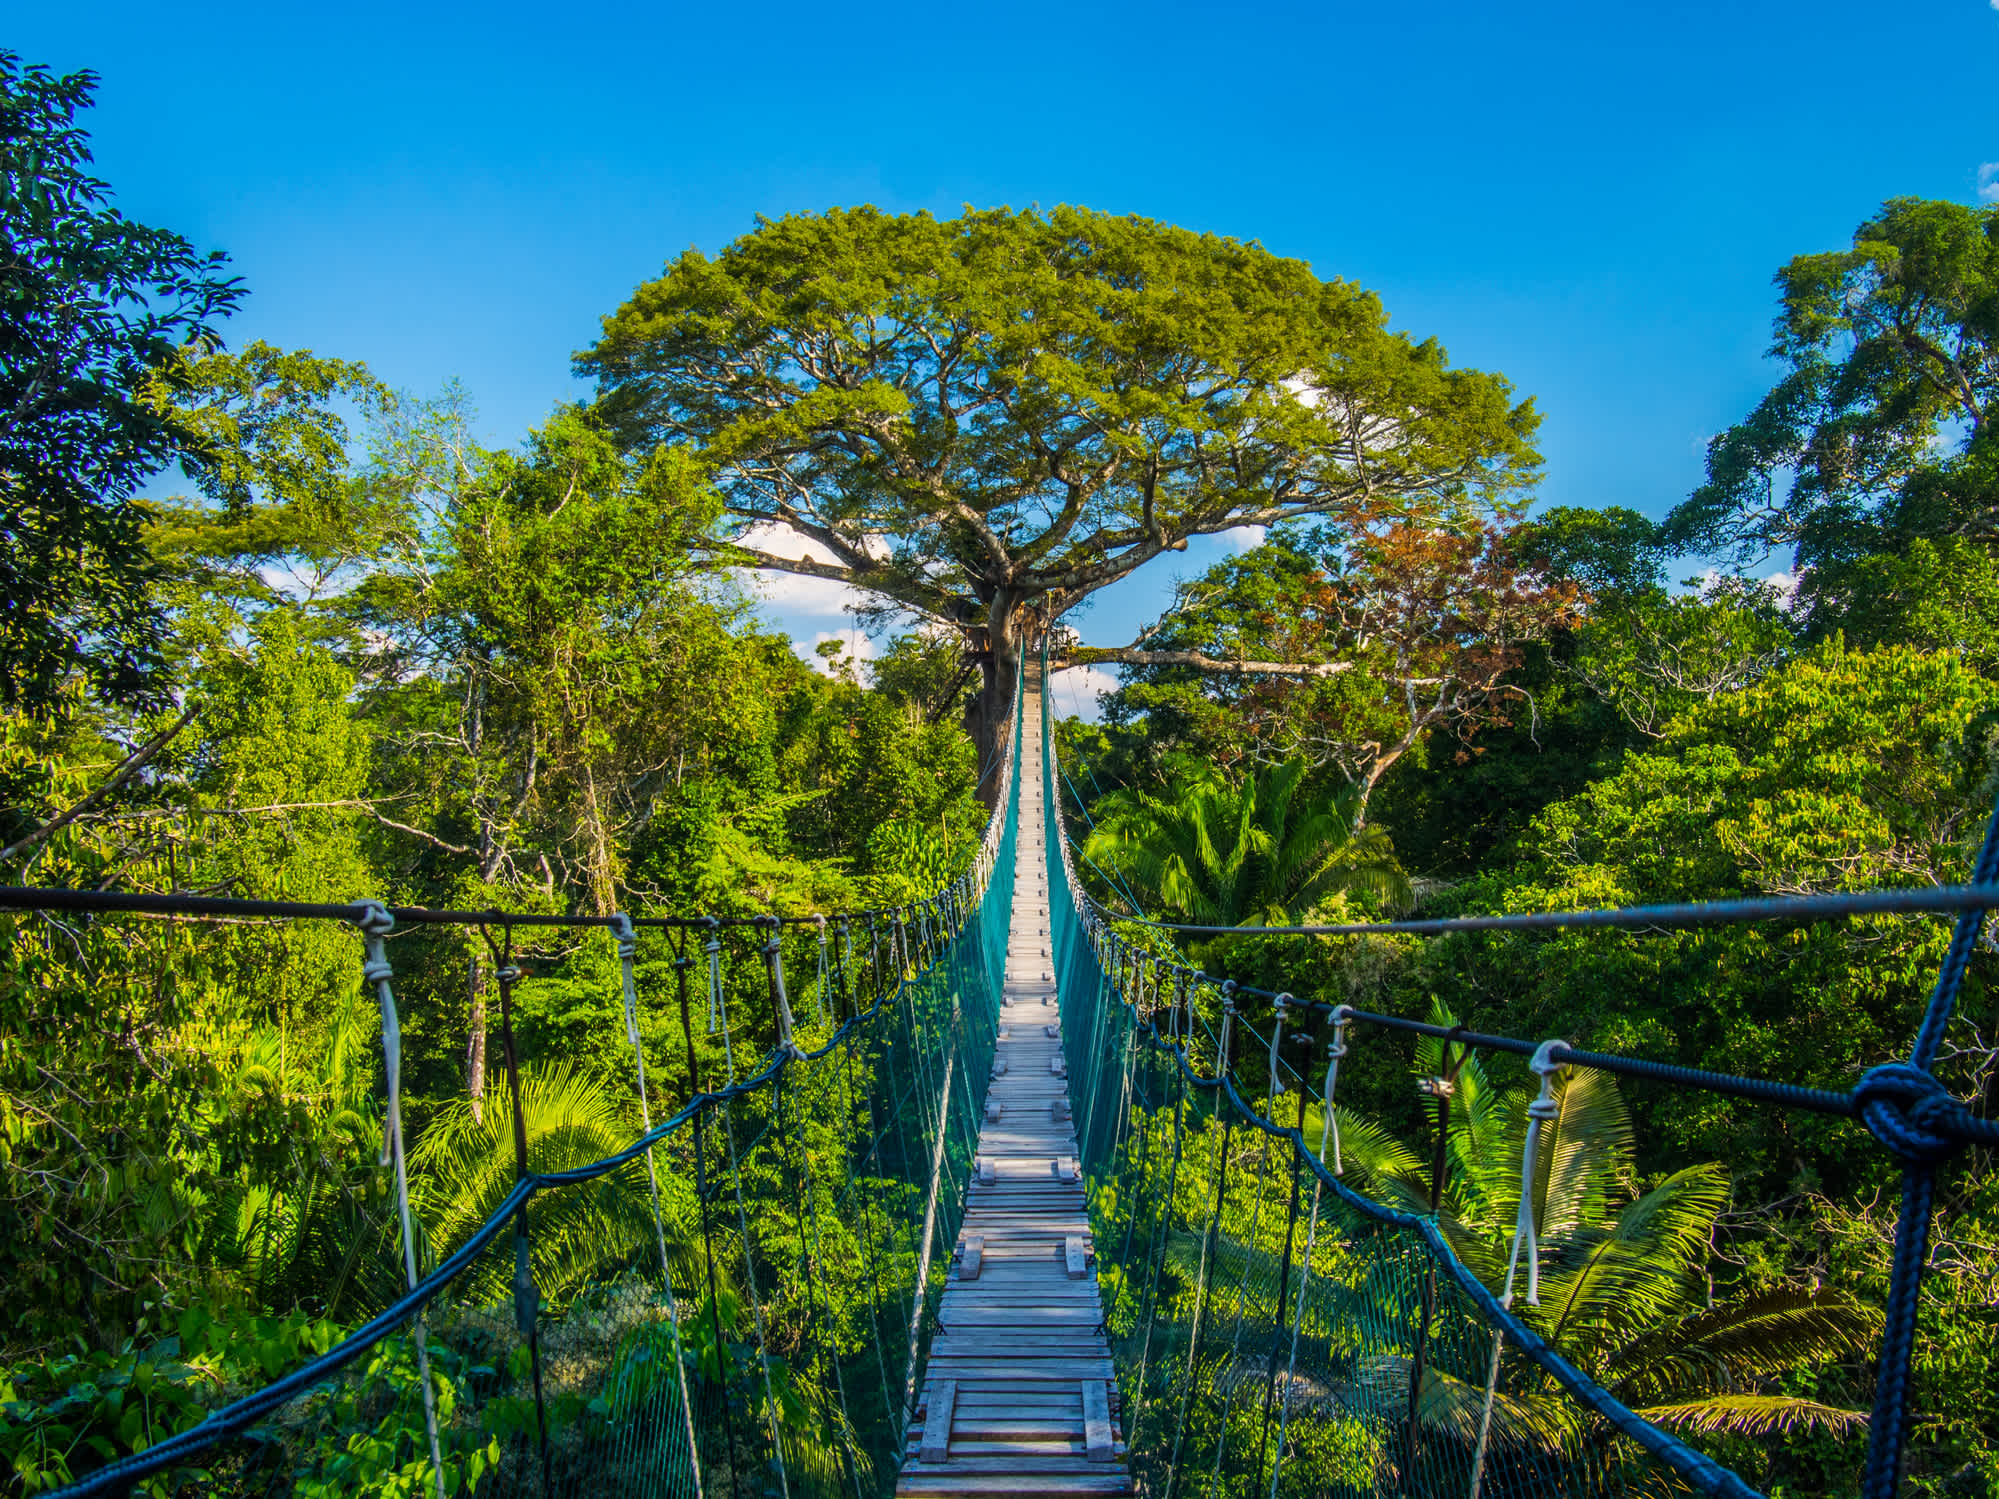 Canopy-Abenteuer im peruanischen Amazonasgebiet, im Naturreservat Tambopata. 